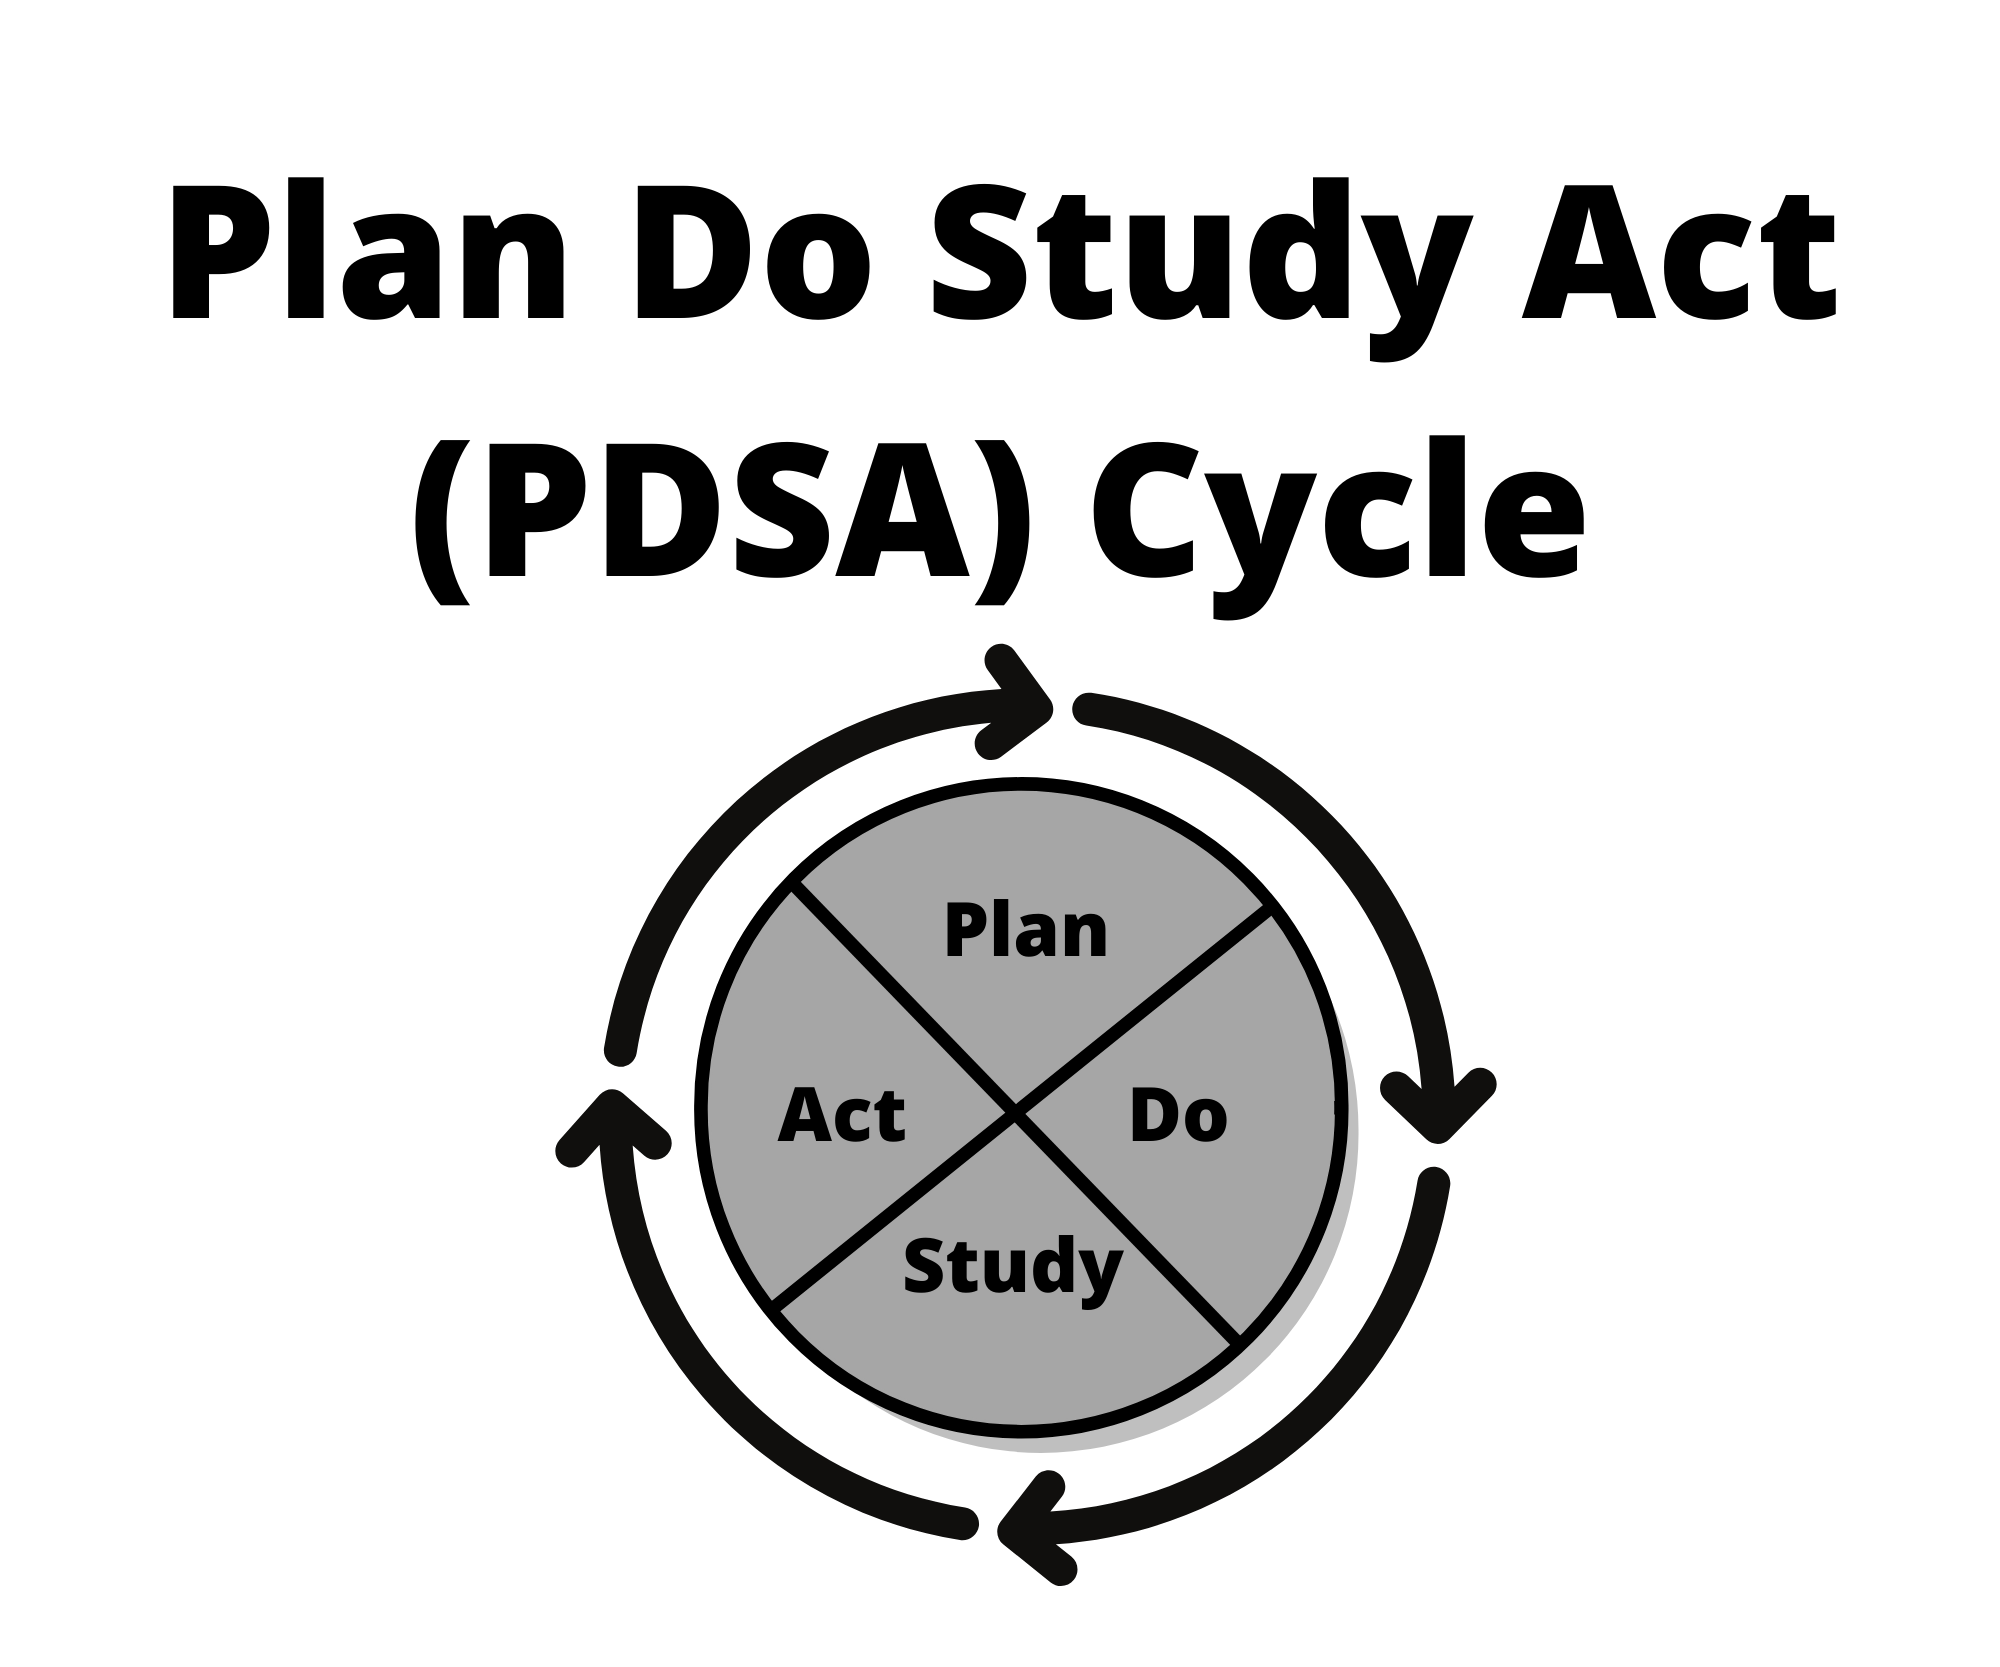 Illustration of the Plan Do Study Act (PDSA) Cycle